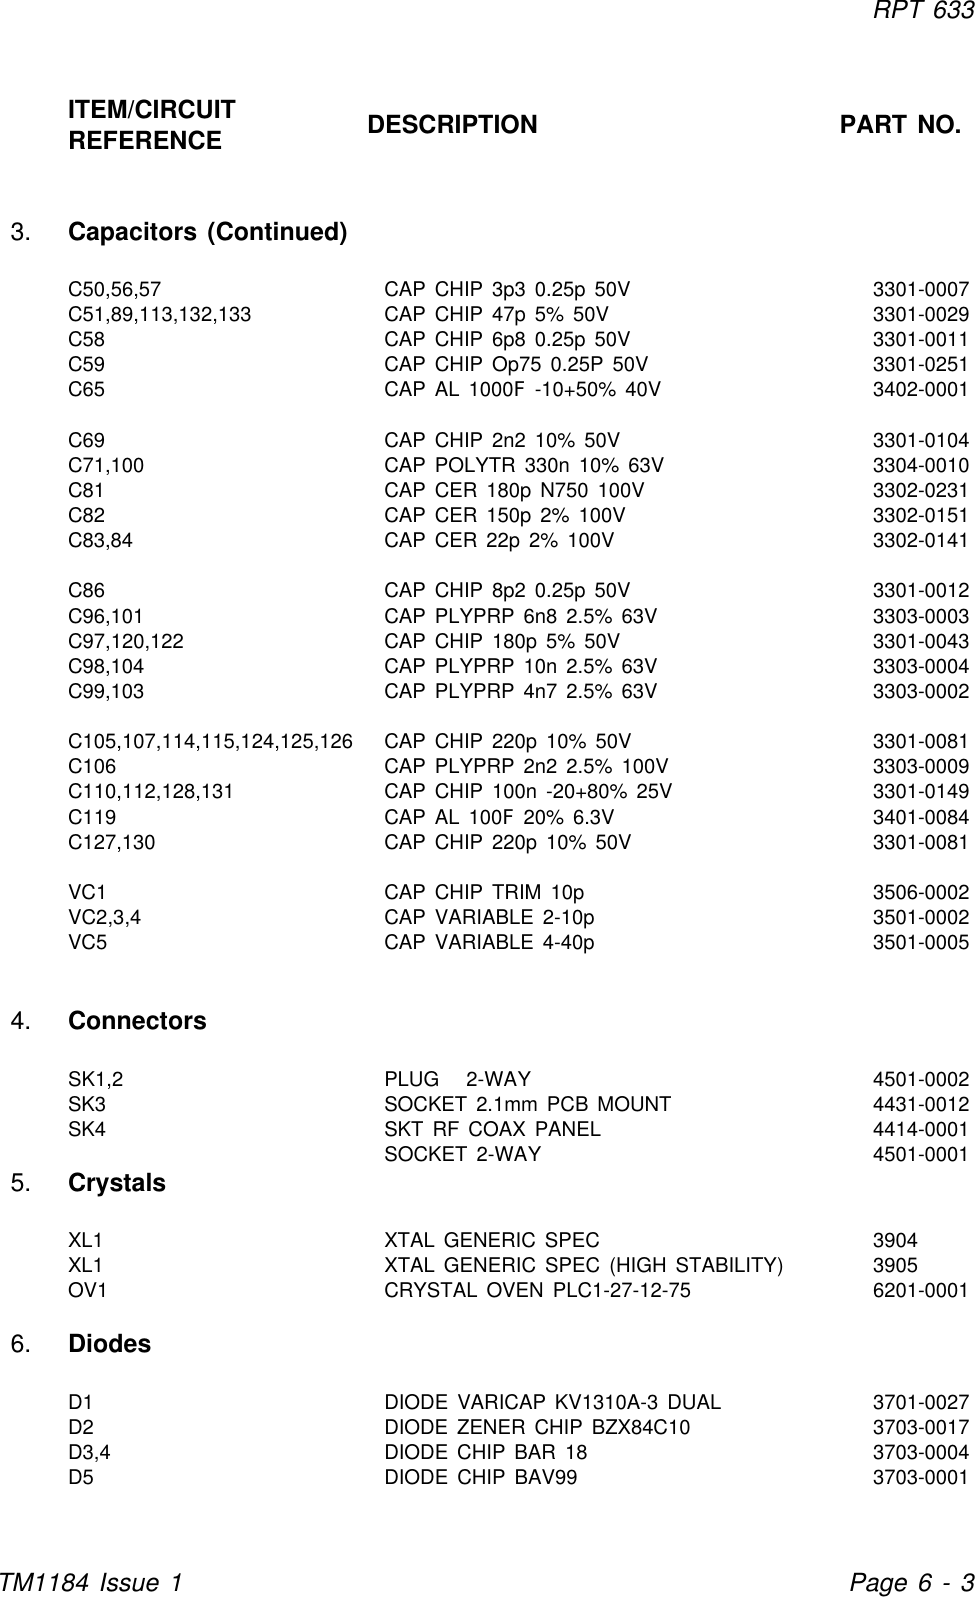 RPT 633TM1184 Issue 1Page 6 - 3ITEM/CIRCUITREFERENCE DESCRIPTION PART NO.3. Capacitors (Continued)C50,56,57 CAP CHIP 3p3 0.25p 50V 3301-0007C51,89,113,132,133 CAP CHIP 47p 5% 50V 3301-0029C58 CAP CHIP 6p8 0.25p 50V 3301-0011C59 CAP CHIP Op75 0.25P 50V 3301-0251C65 CAP AL 1000F -10+50% 40V 3402-0001C69 CAP CHIP 2n2 10% 50V 3301-0104C71,100 CAP POLYTR 330n 10% 63V 3304-0010C81 CAP CER 180p N750 100V 3302-0231C82 CAP CER 150p 2% 100V 3302-0151C83,84 CAP CER 22p 2% 100V 3302-0141C86 CAP CHIP 8p2 0.25p 50V 3301-0012C96,101 CAP PLYPRP 6n8 2.5% 63V 3303-0003C97,120,122 CAP CHIP 180p 5% 50V 3301-0043C98,104 CAP PLYPRP 10n 2.5% 63V 3303-0004C99,103 CAP PLYPRP 4n7 2.5% 63V 3303-0002C105,107,114,115,124,125,126 CAP CHIP 220p 10% 50V 3301-0081C106 CAP PLYPRP 2n2 2.5% 100V 3303-0009C110,112,128,131 CAP CHIP 100n -20+80% 25V 3301-0149C119 CAP AL 100F 20% 6.3V 3401-0084C127,130 CAP CHIP 220p 10% 50V 3301-0081VC1 CAP CHIP TRIM 10p 3506-0002VC2,3,4 CAP VARIABLE 2-10p 3501-0002VC5 CAP VARIABLE 4-40p 3501-00054. Connectors   SK1,2 PLUG   2-WAY 4501-0002SK3 SOCKET 2.1mm PCB MOUNT 4431-0012SK4 SKT RF COAX PANEL 4414-0001SOCKET 2-WAY 4501-00015. CrystalsXL1 XTAL GENERIC SPEC 3904XL1 XTAL GENERIC SPEC (HIGH STABILITY) 3905OV1 CRYSTAL OVEN PLC1-27-12-75 6201-00016. DiodesD1 DIODE VARICAP KV1310A-3 DUAL 3701-0027D2 DIODE ZENER CHIP BZX84C10 3703-0017D3,4 DIODE CHIP BAR 18 3703-0004D5 DIODE CHIP BAV99 3703-0001